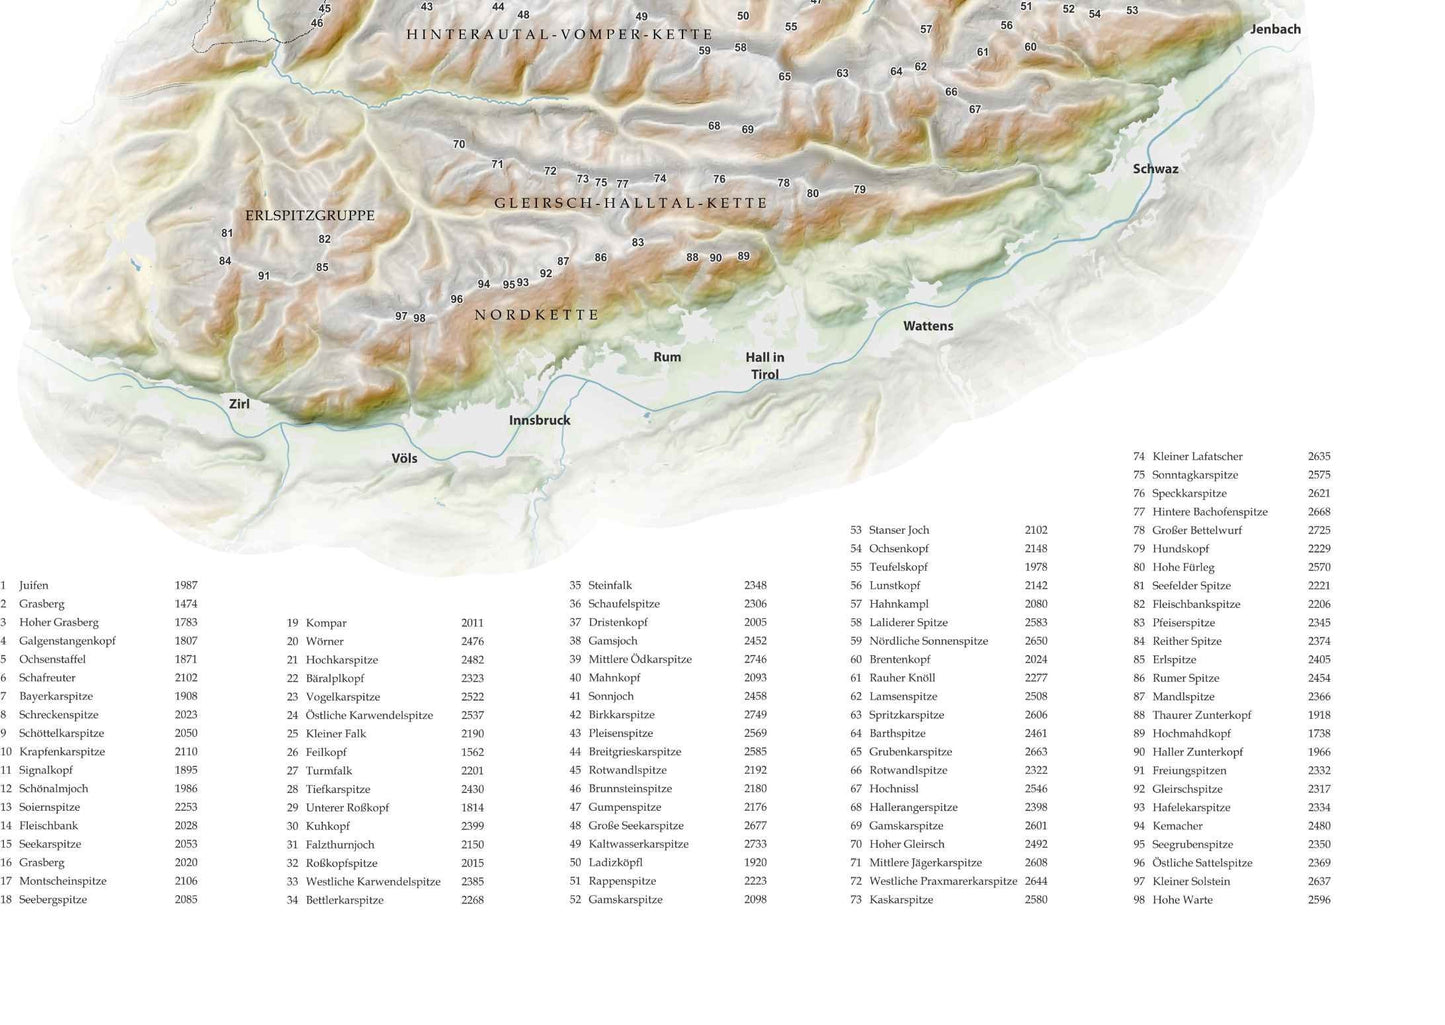 Karwendel Relief Karte 40 x 50 cm